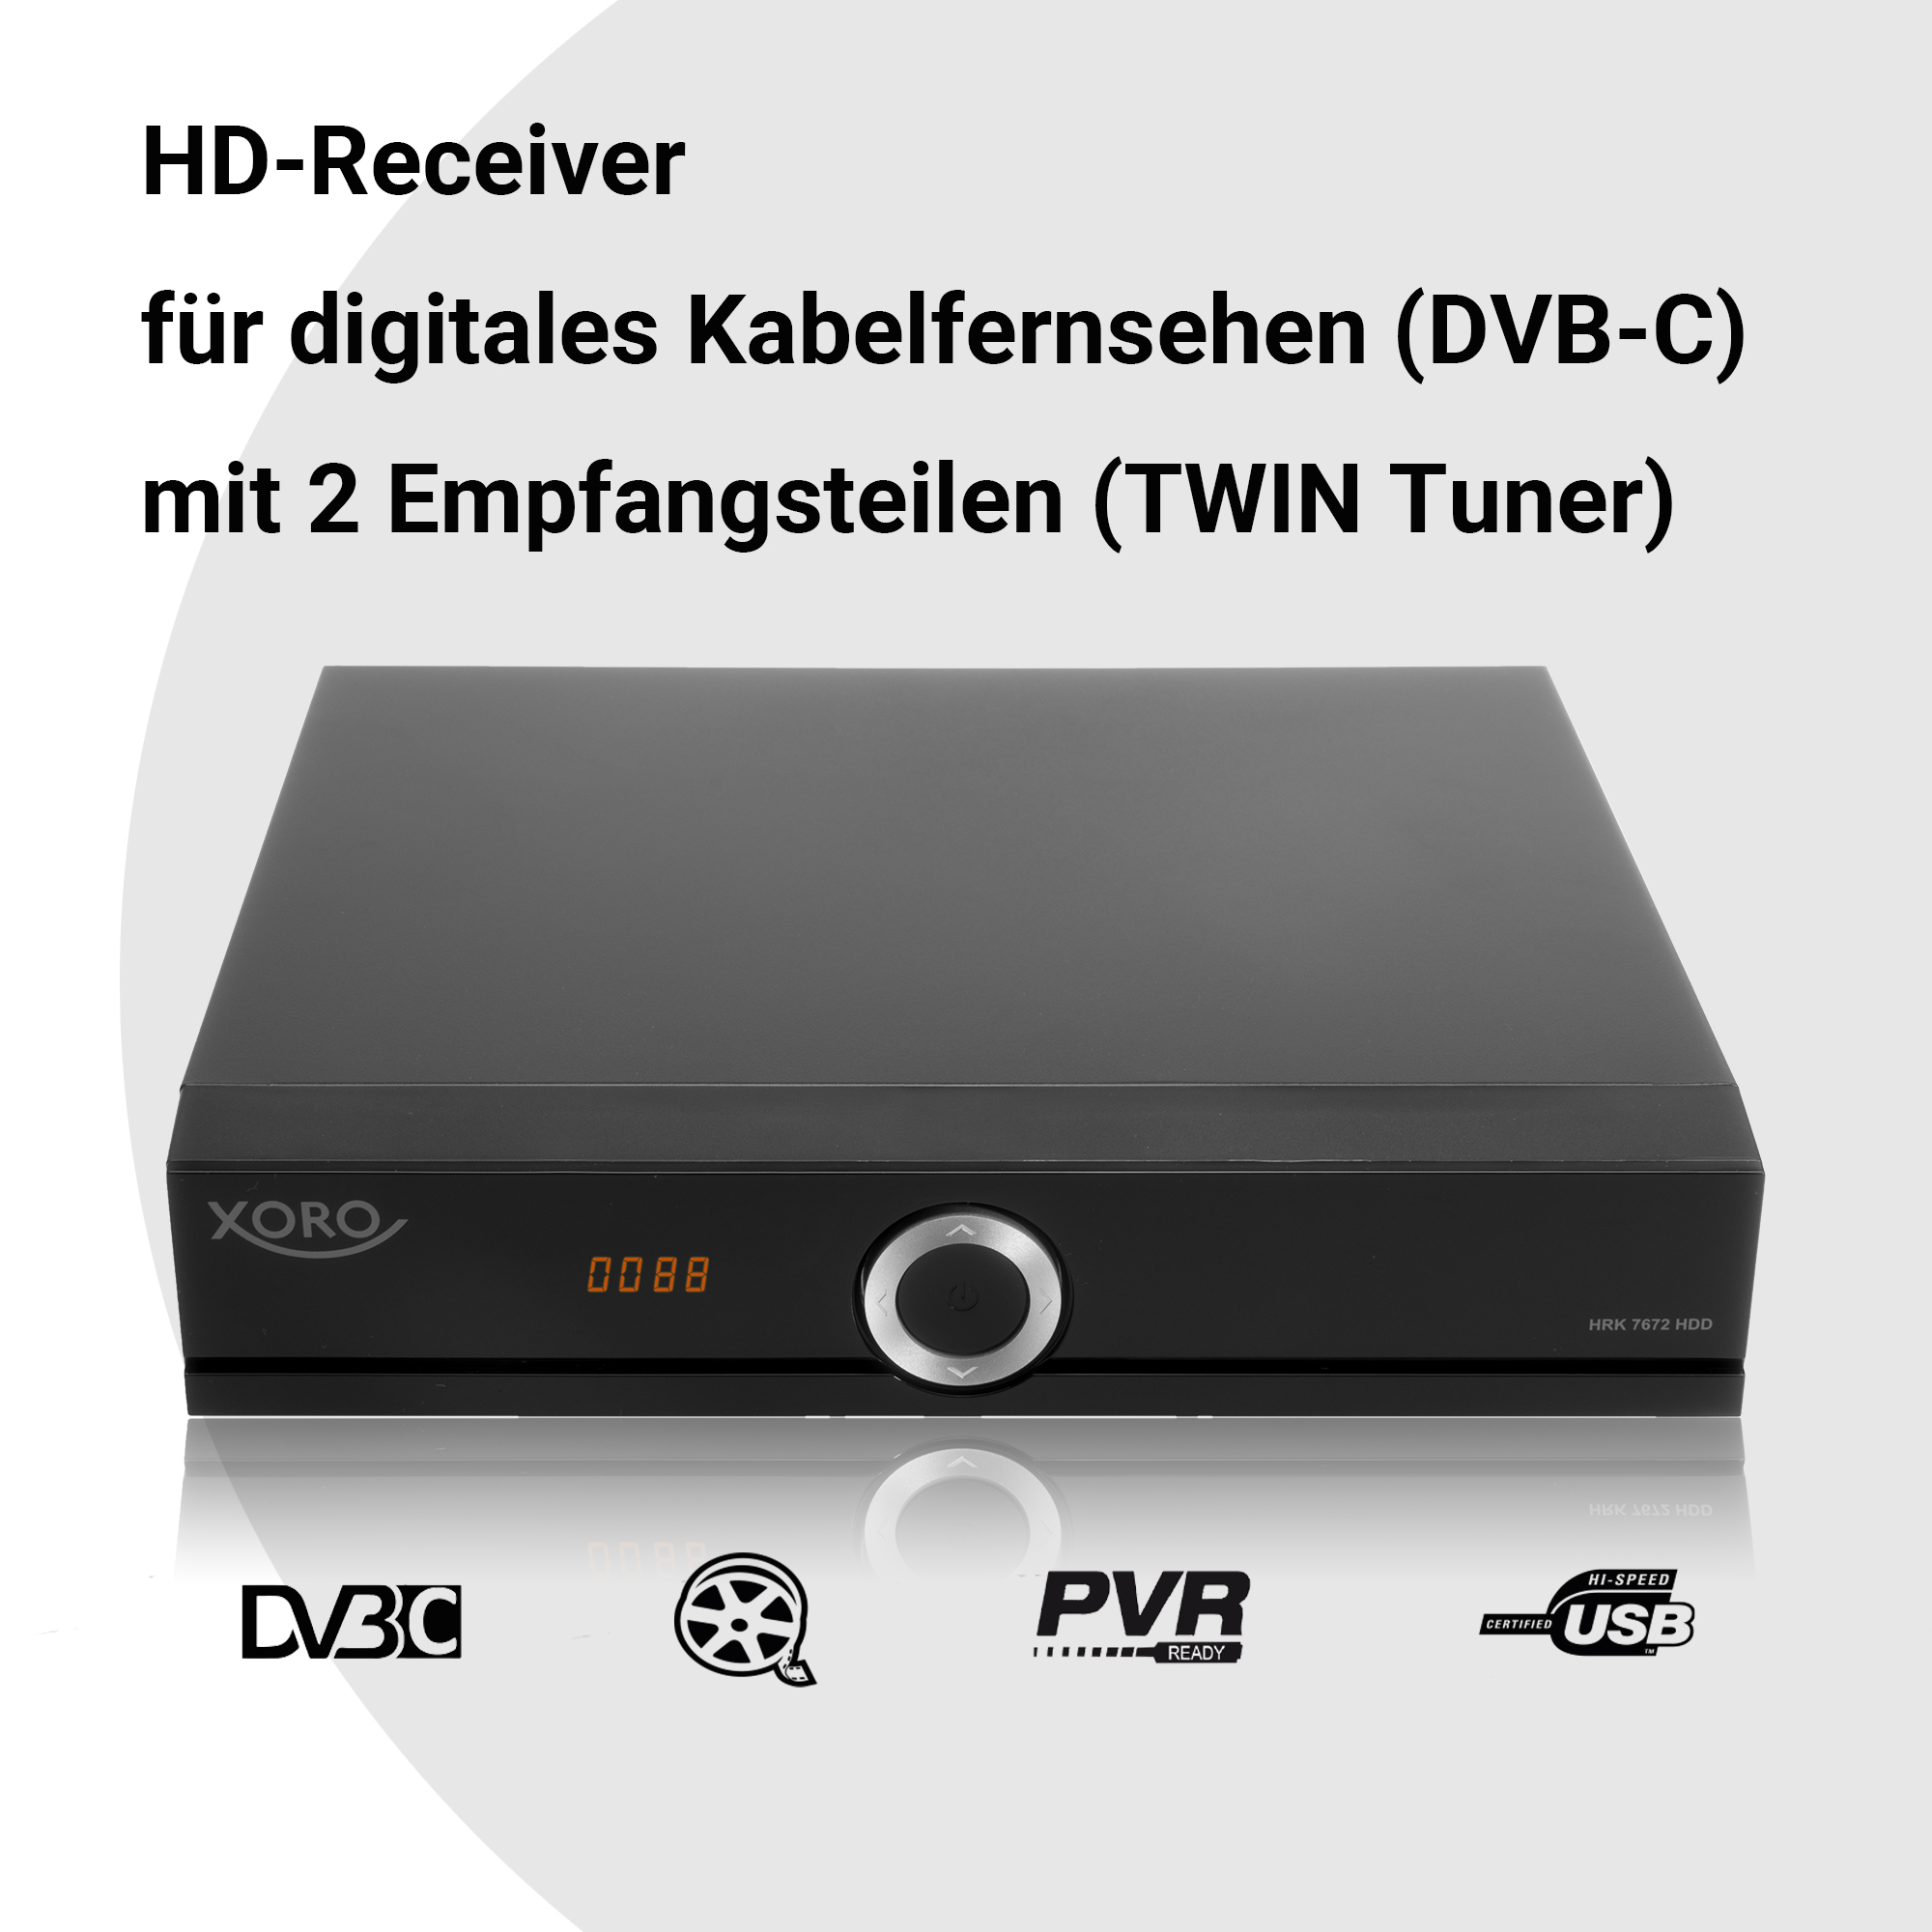 XORO XORO HRK 0TB DVB-C Receiver 12V) Kabelreceiver MiniSCART, HDD (HDTV Tuner, PVR USB Ready, DVB-C 7672 HDMI, HD TWIN